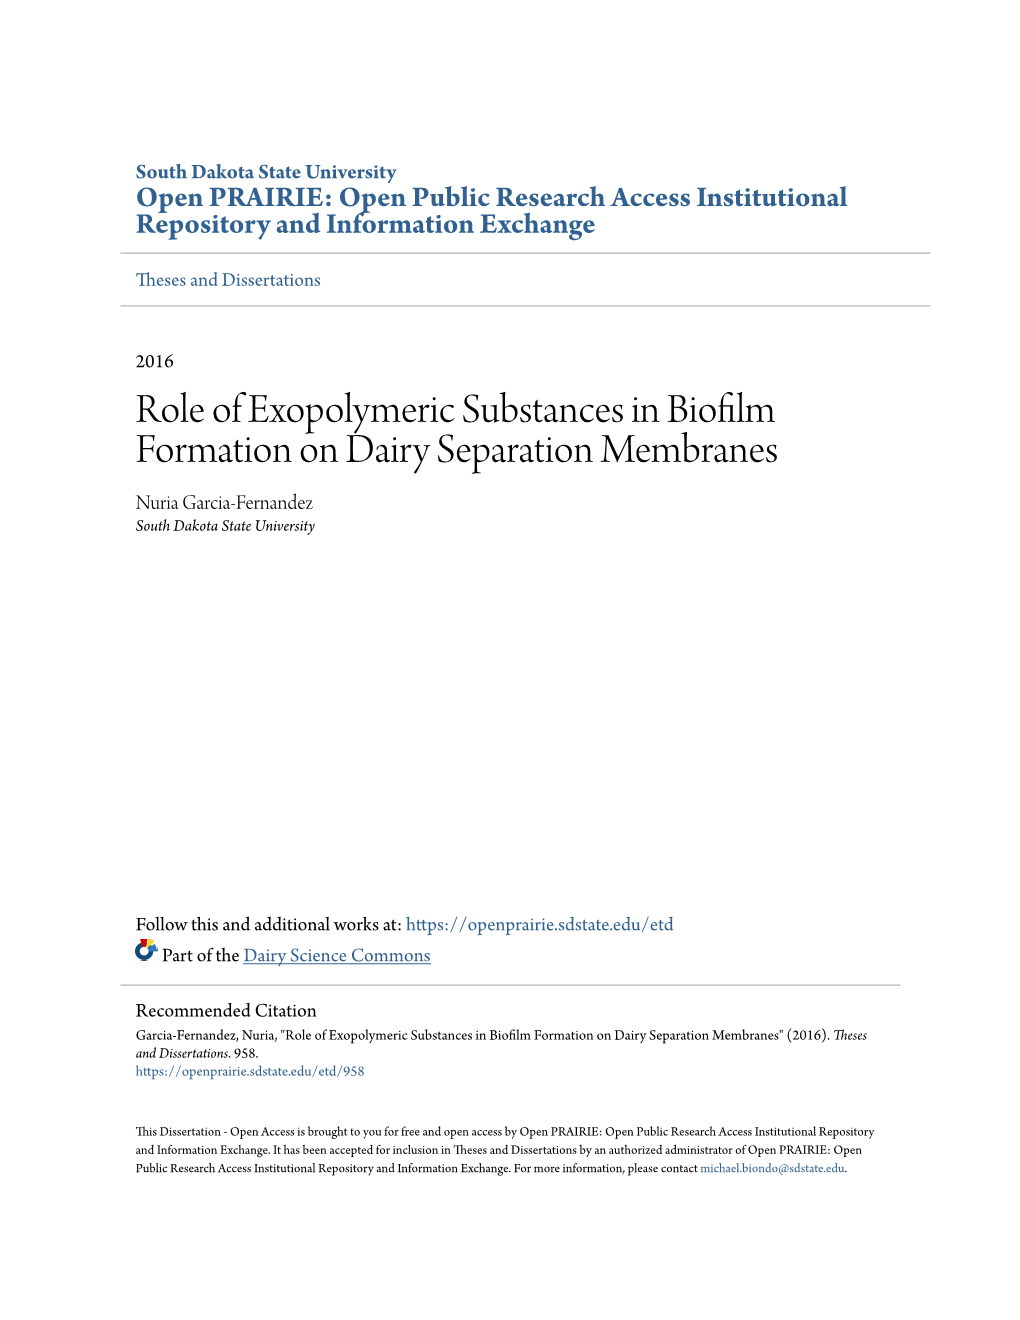 Role of Exopolymeric Substances in Biofilm Formation on Dairy Separation Membranes Nuria Garcia-Fernandez South Dakota State University